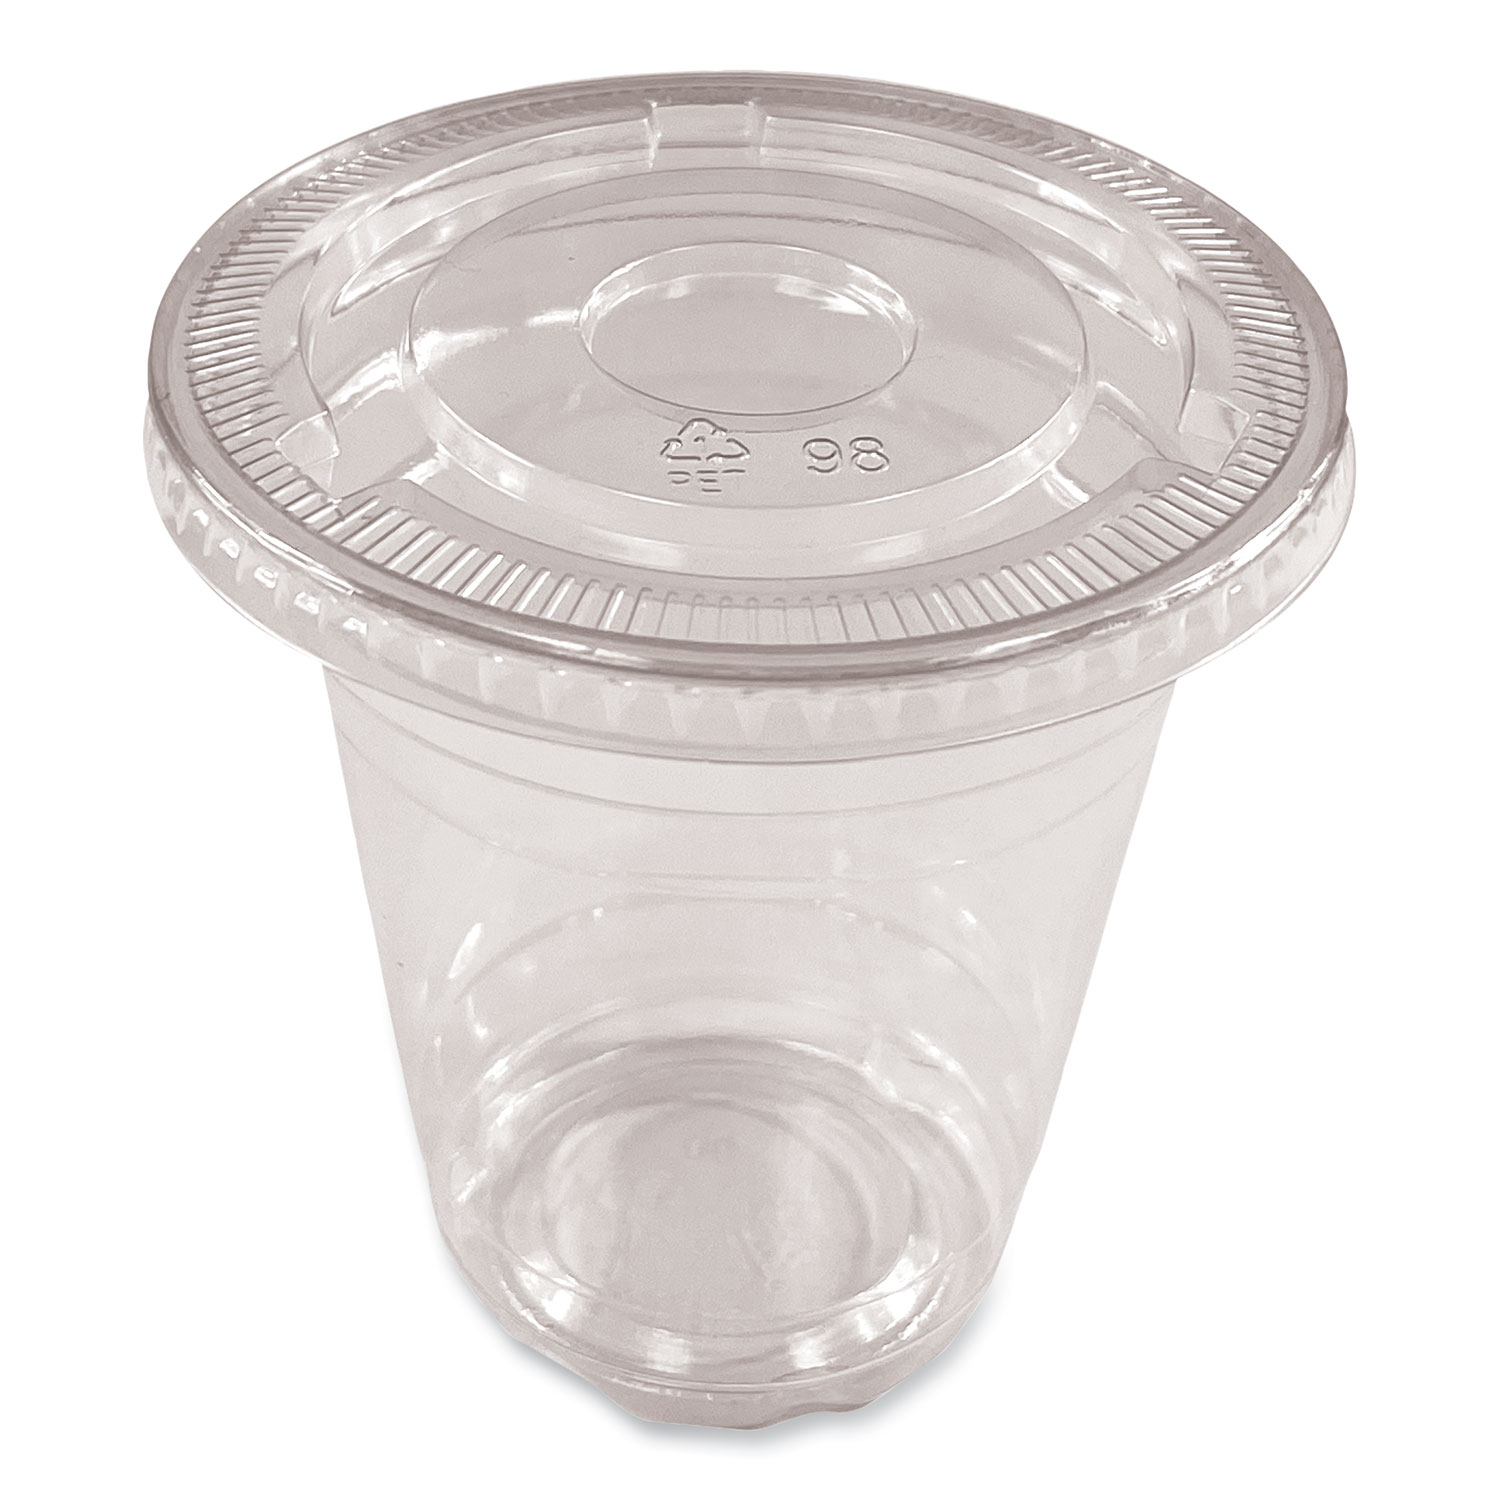 14 oz. Clear PET Cups, Case of 1,000 – CiboWares